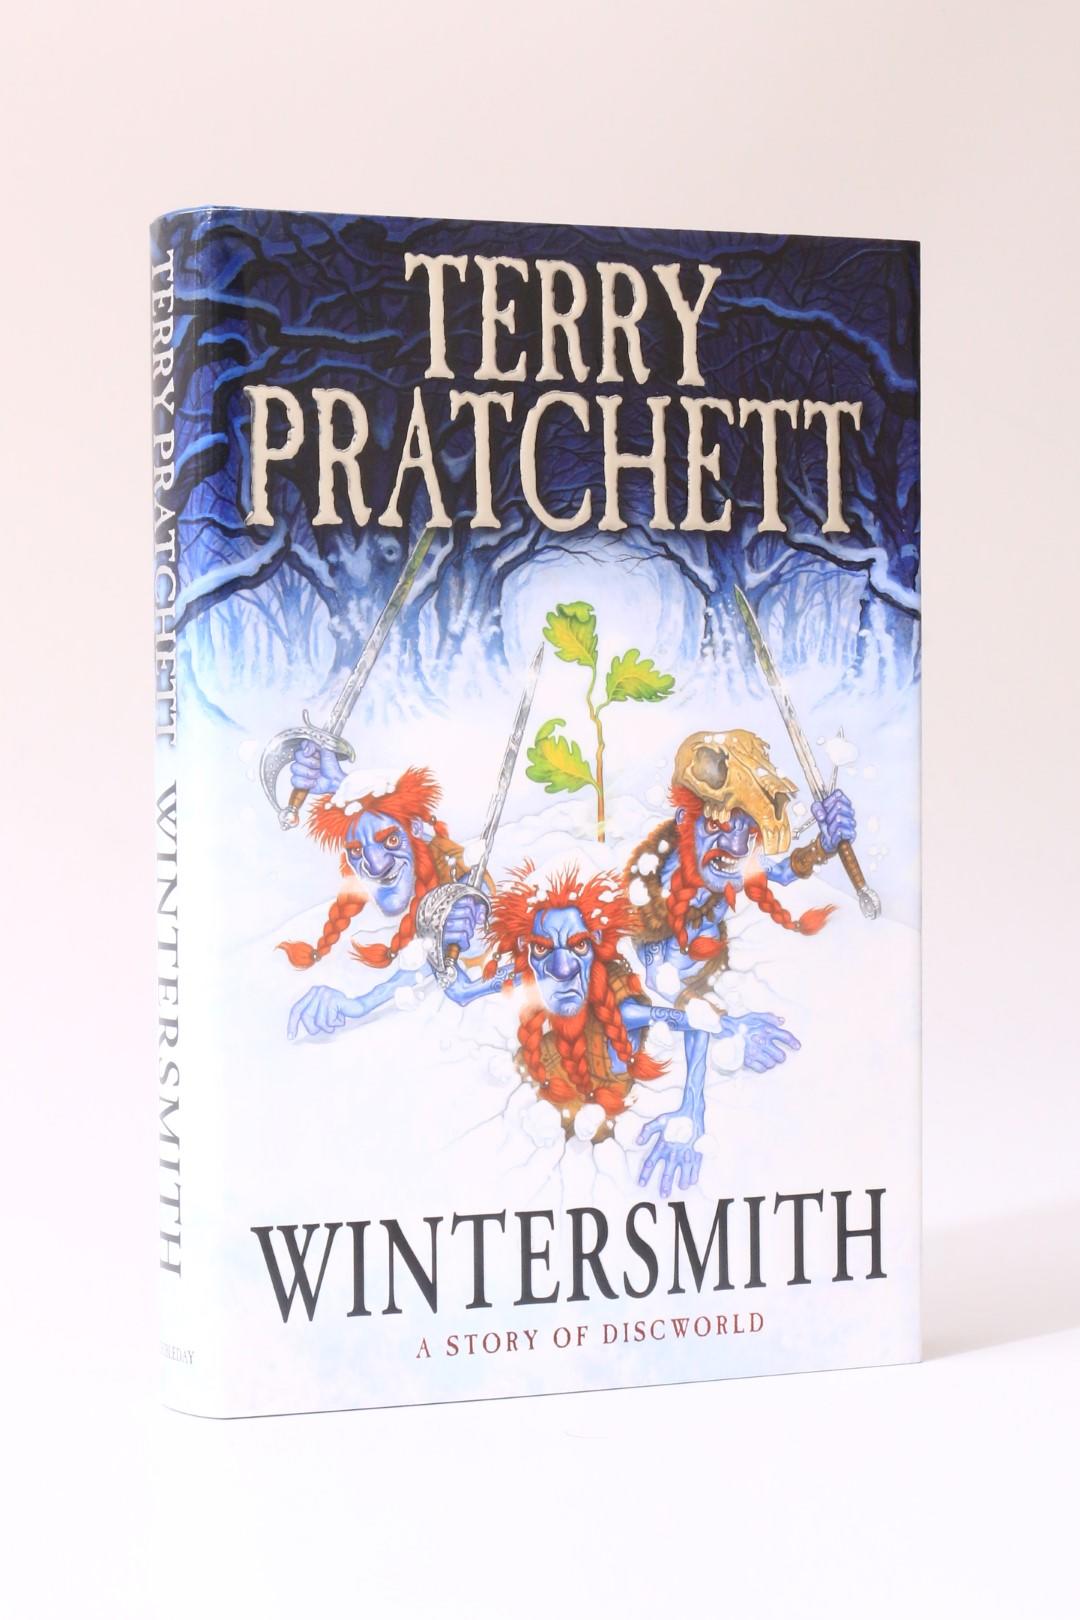 Terry Pratchett - Wintersmith - Doubleday, 2006, First Edition.